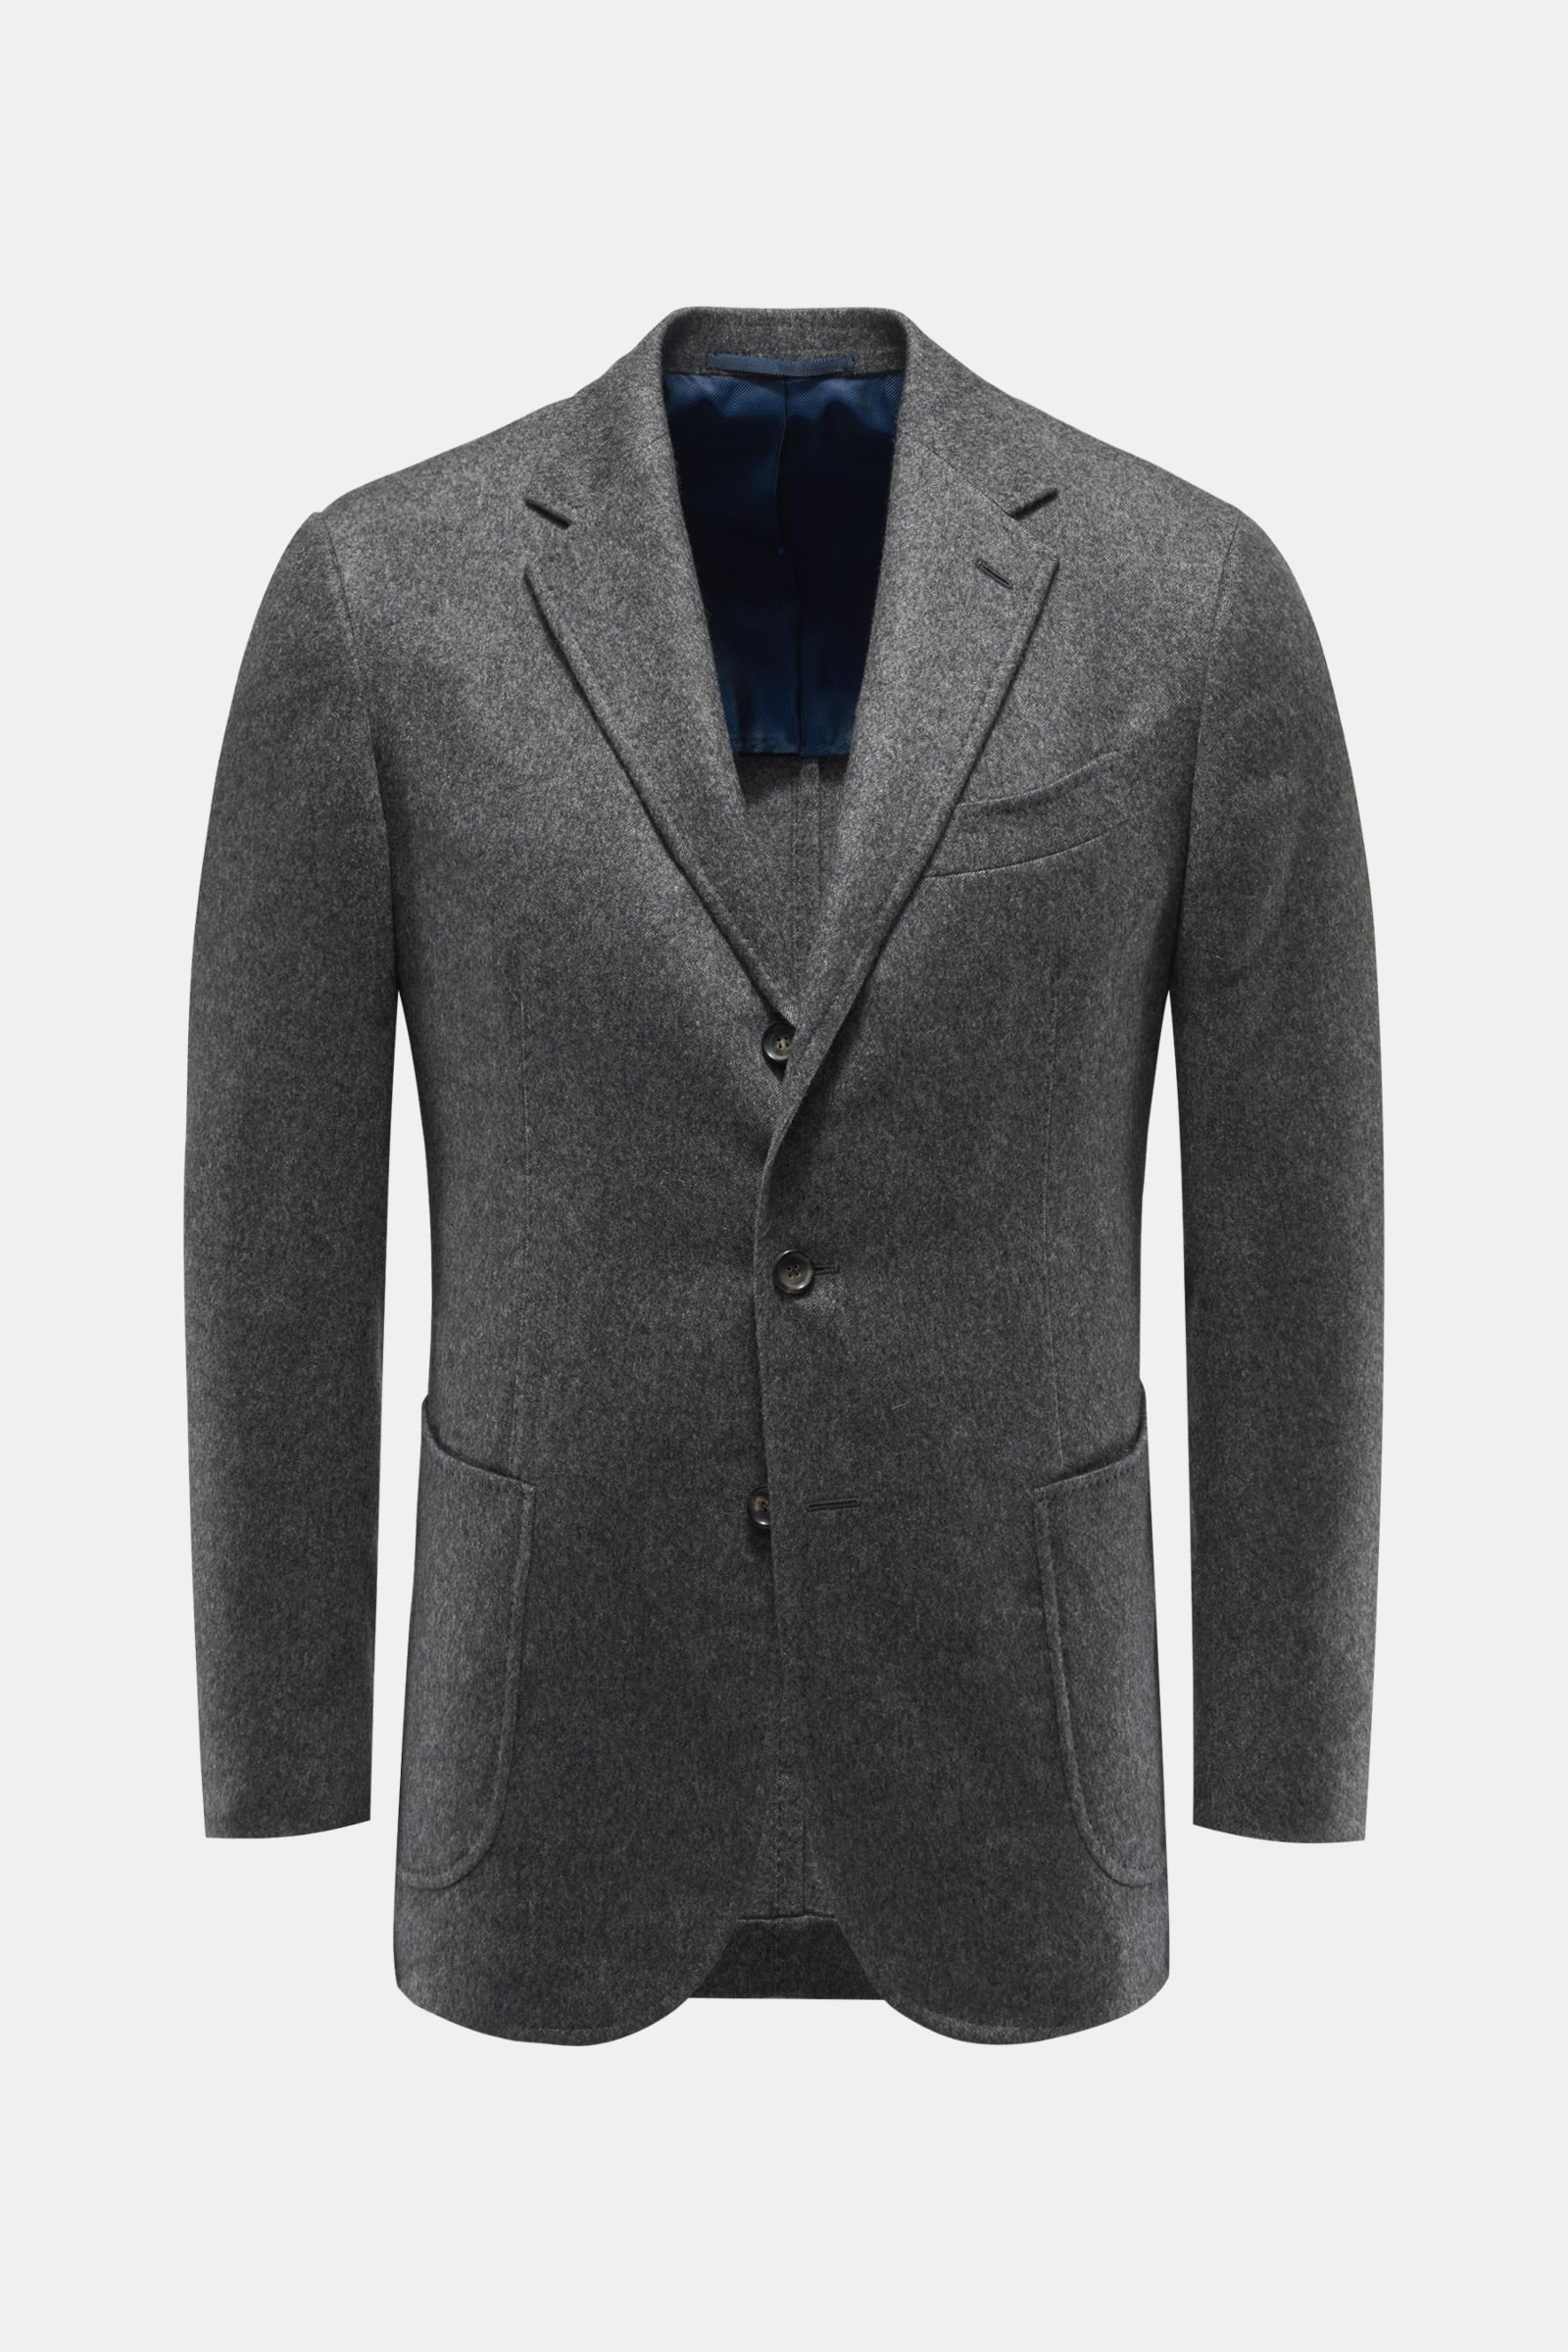 Cashmere smart-casual jacket 'Guvincenzo' dark grey